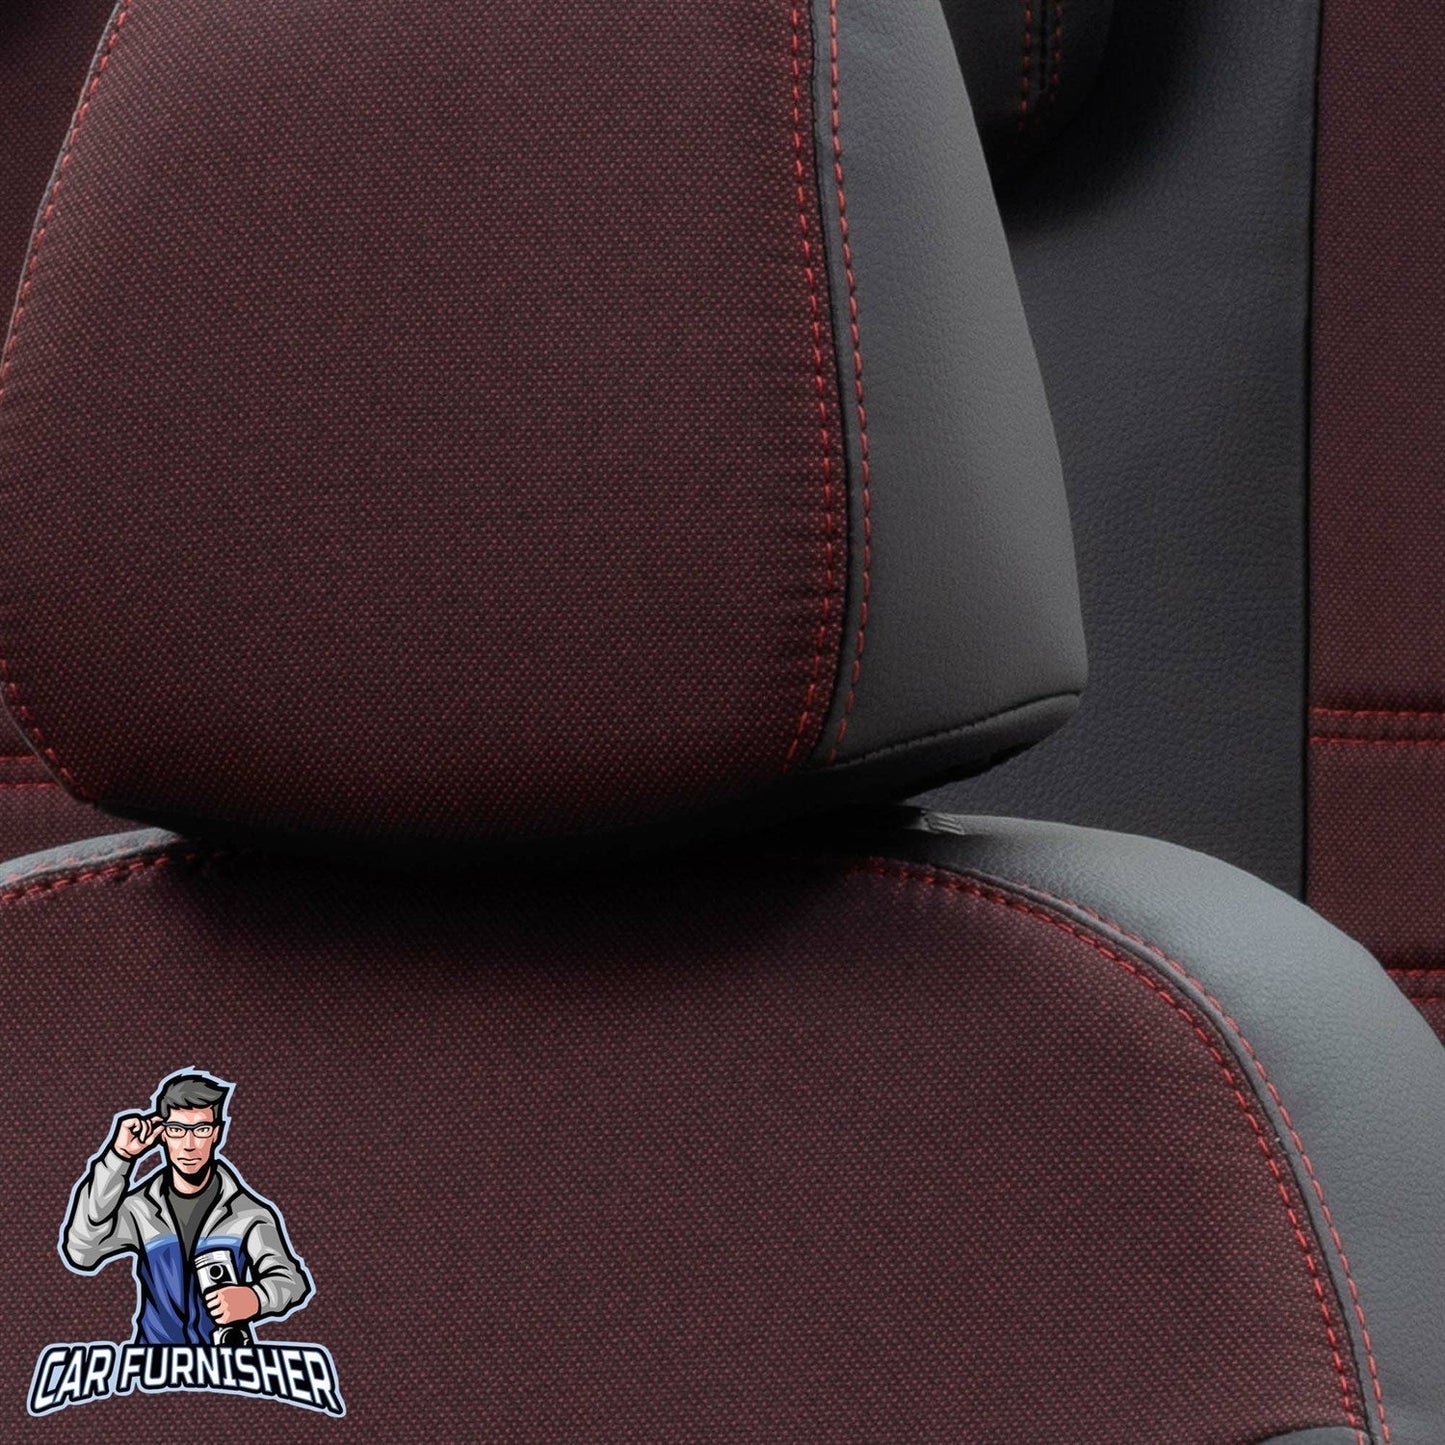 Citroen C-Elysee Seat Covers Paris Leather & Jacquard Design Red Leather & Jacquard Fabric